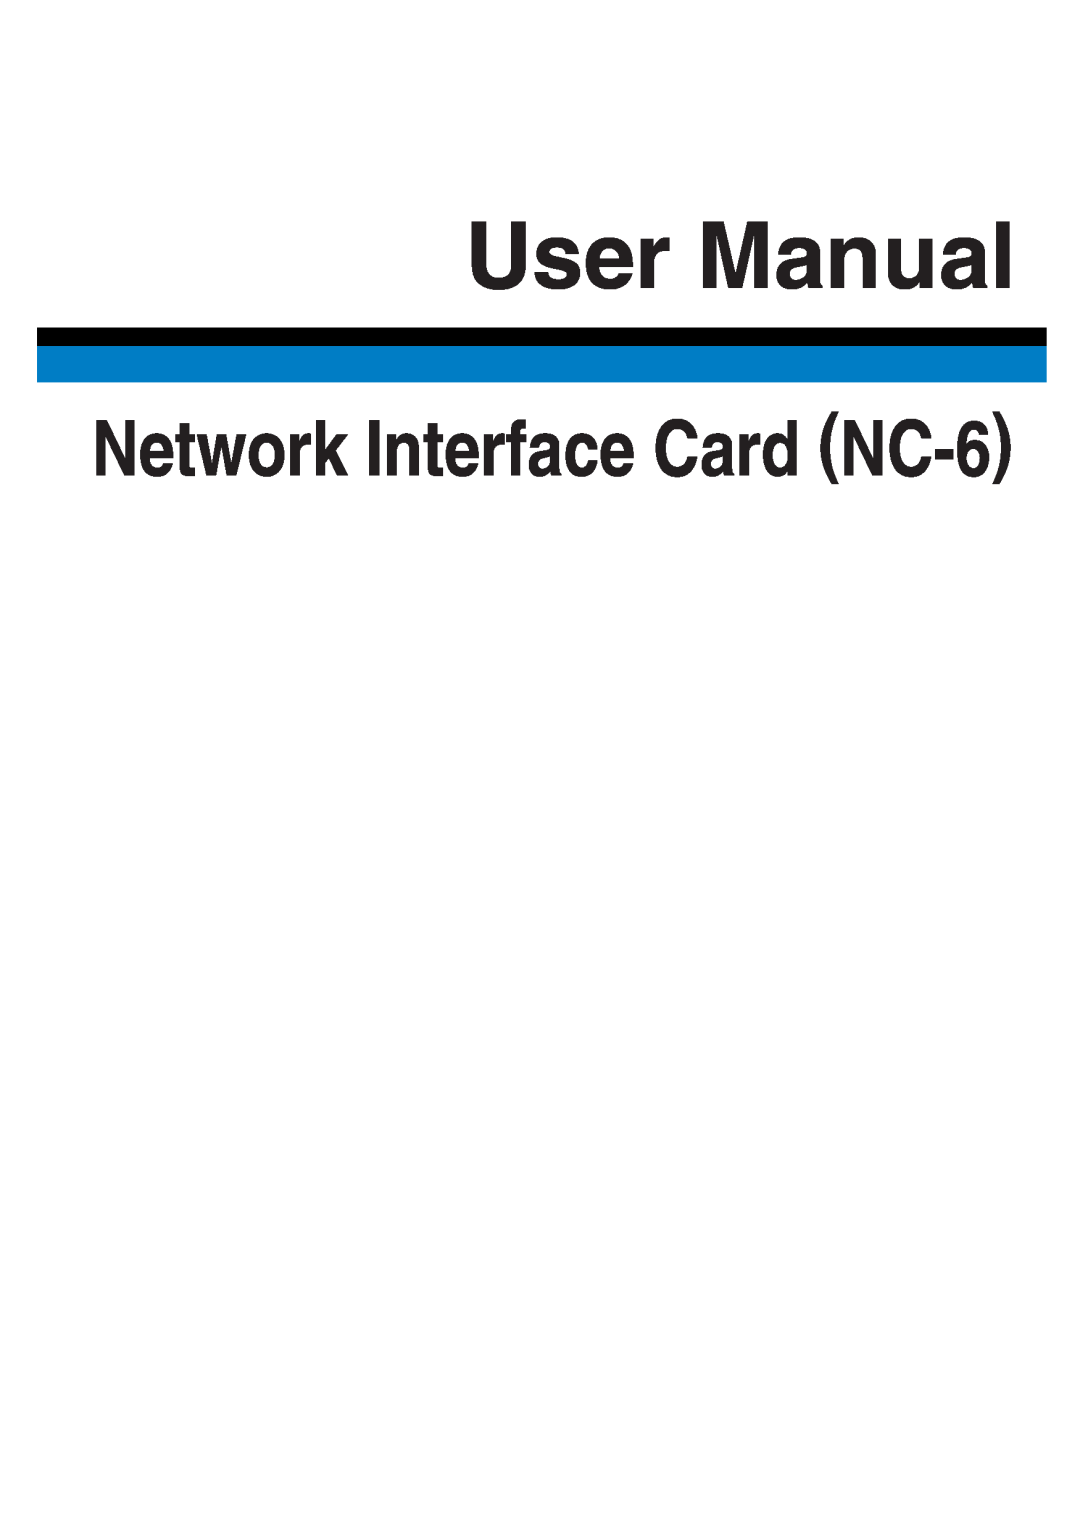 Konica Minolta user manual User Manual, Network Interface Card NC-6 